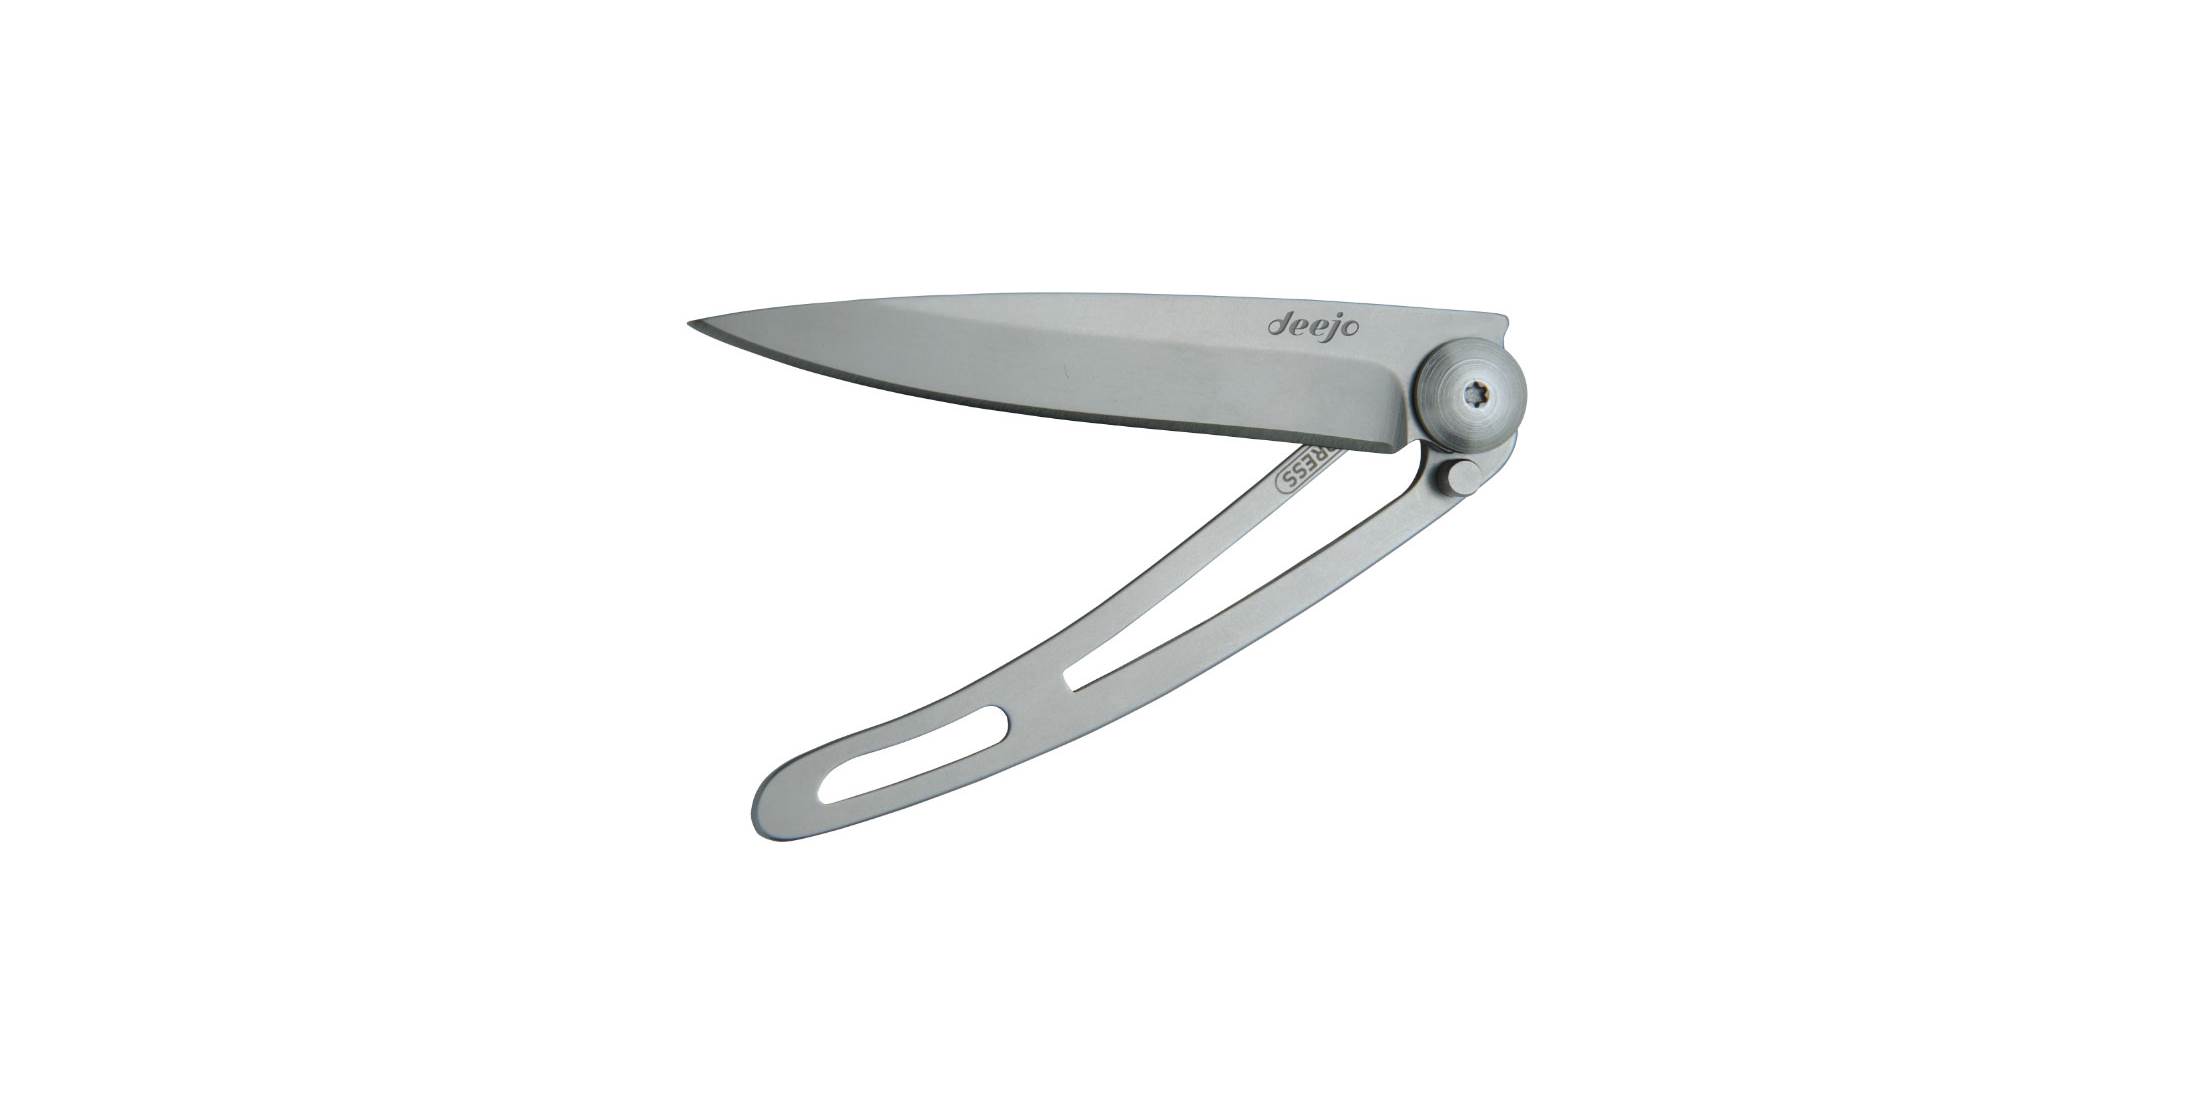 Deejo Knives Naked 27g Folding Knife 3 Satin Plain Blade 